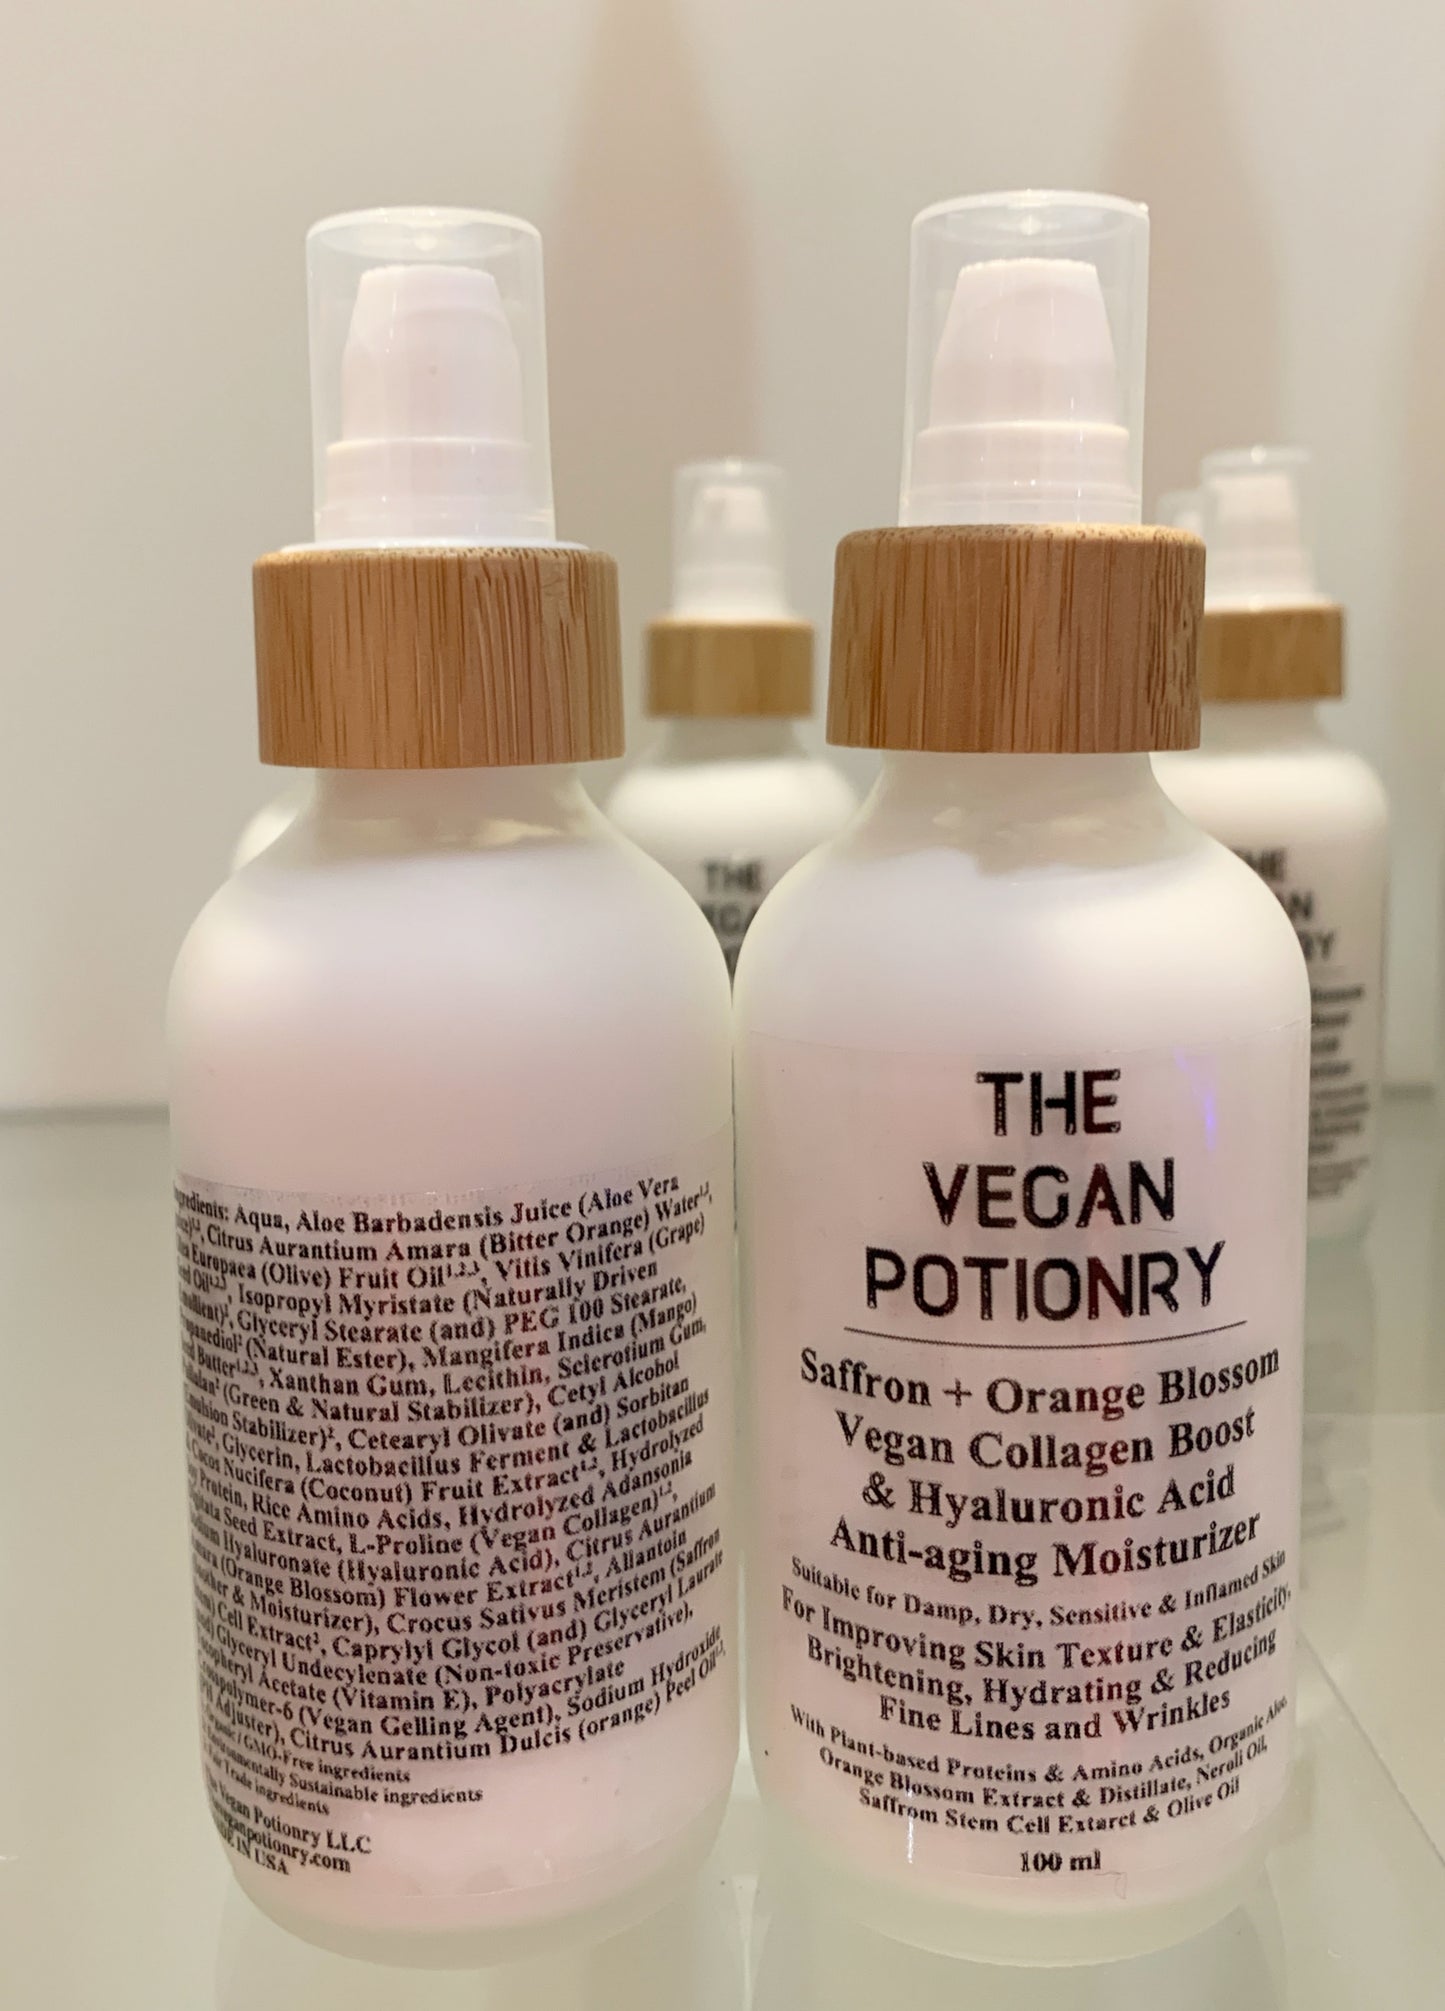 Saffron + Orange Blossom Vegan Collagen Boost  & Hyaluronic Acid  Anti-aging Moisturizer | The Vegan Potionry